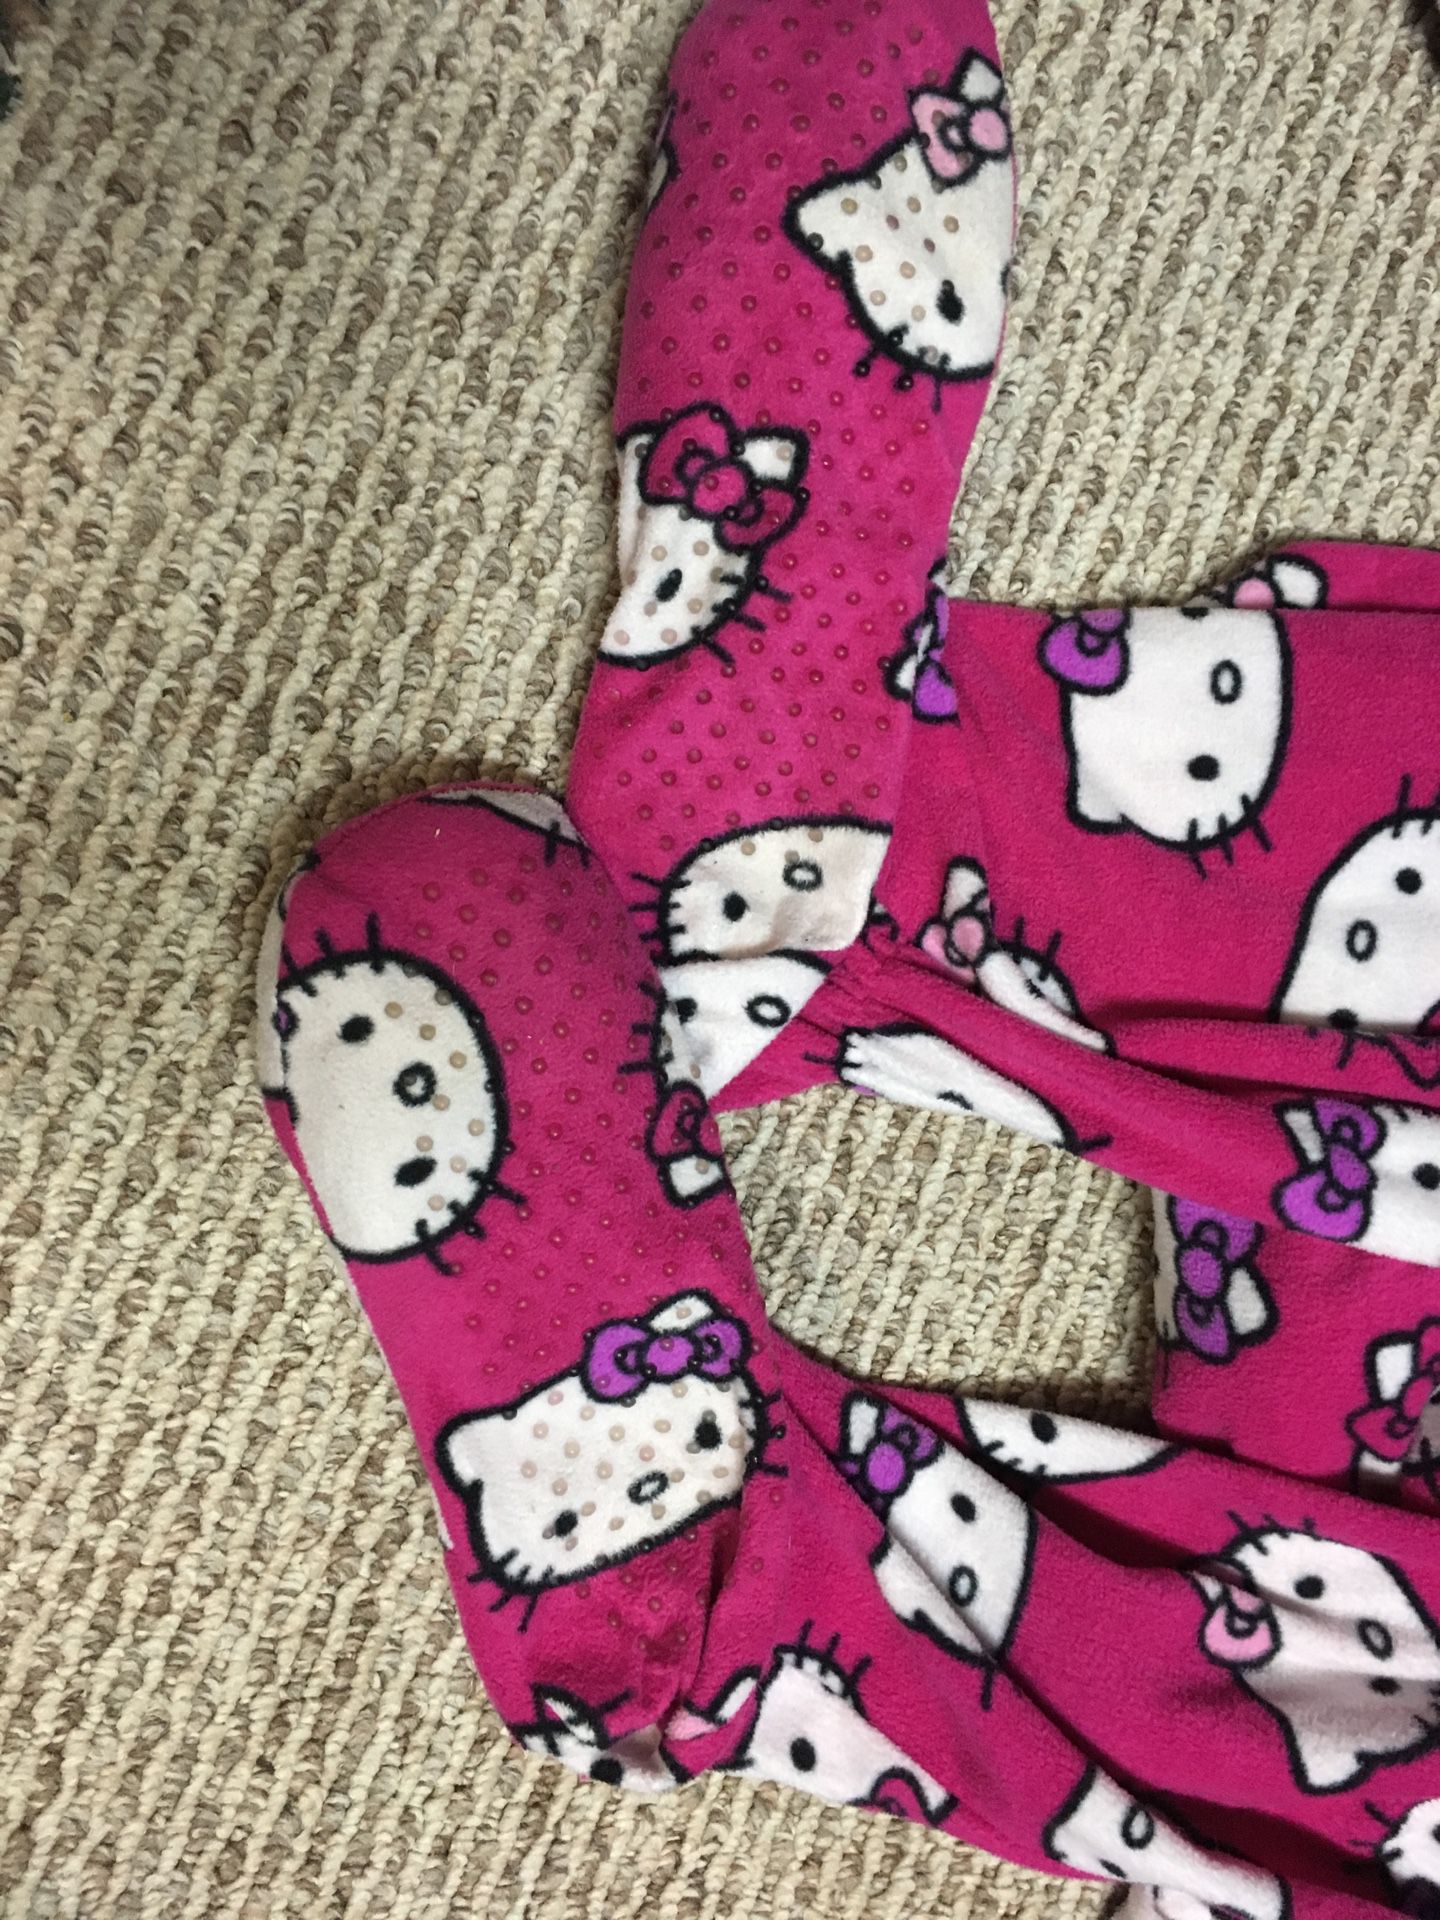 Hello Kitty pajamas, hat, pillow